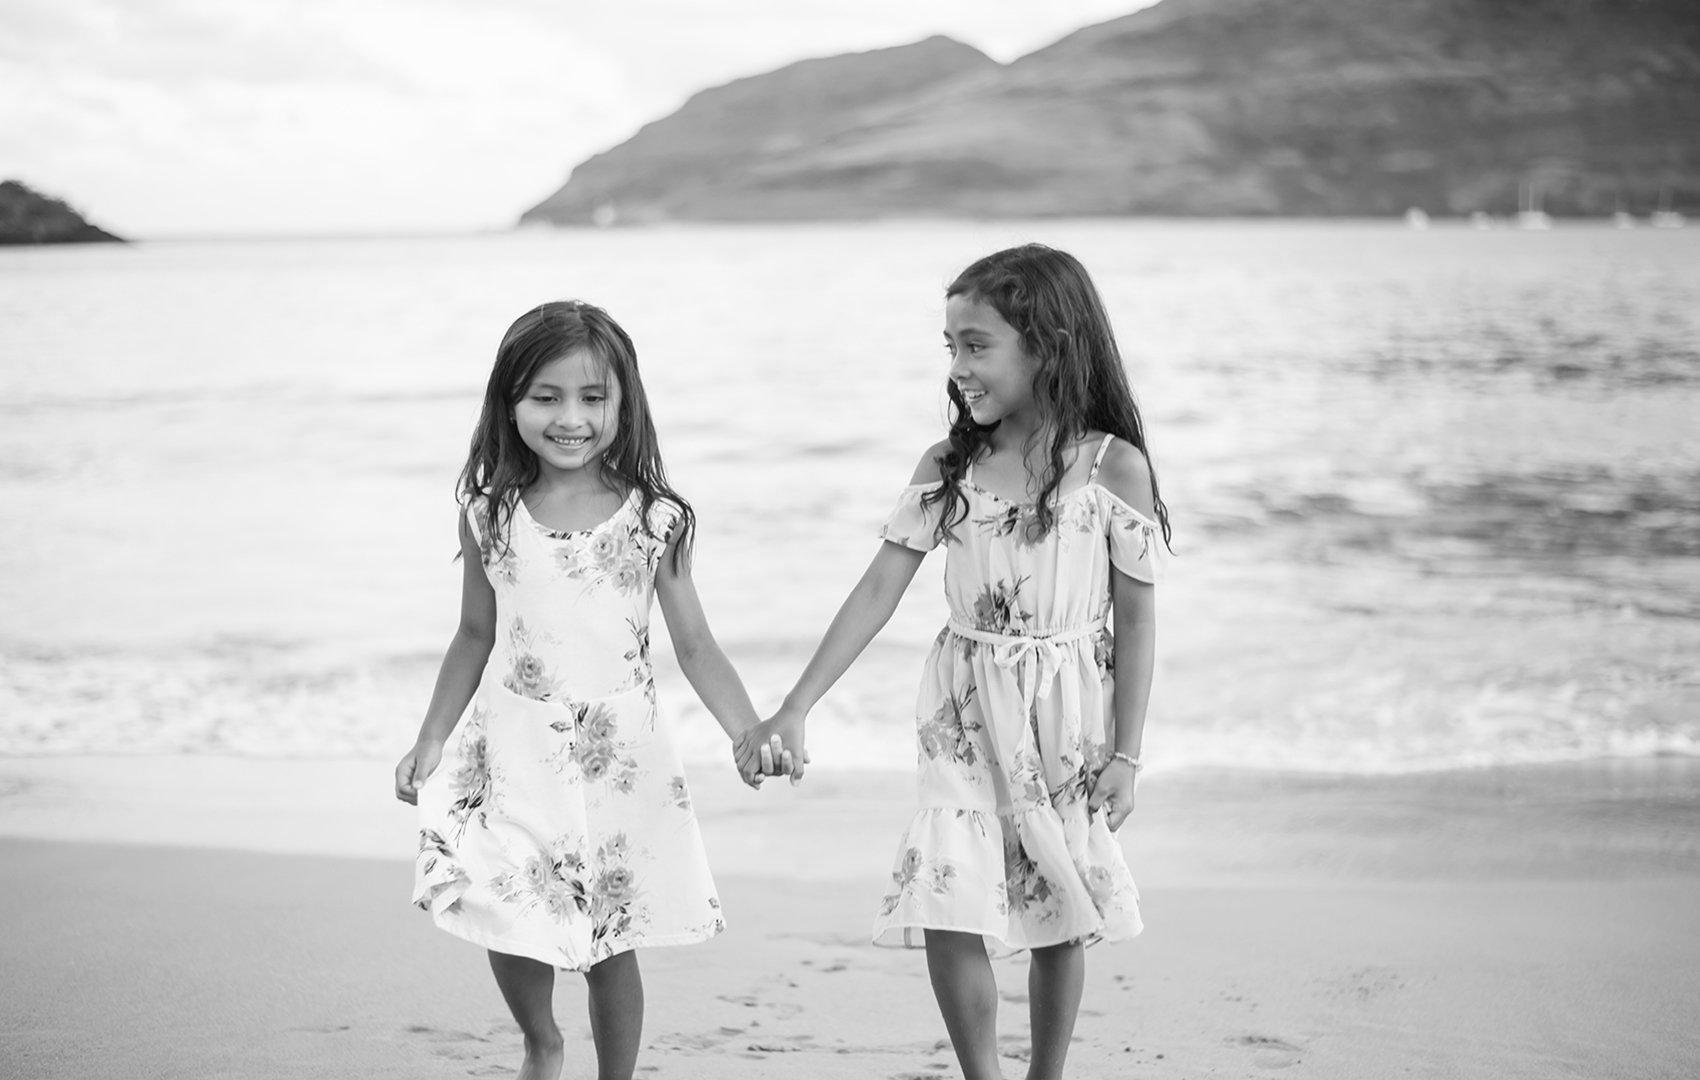 Maui family photographers | Kauai family photographers |  Oahu family photographers | Big Island family photographers